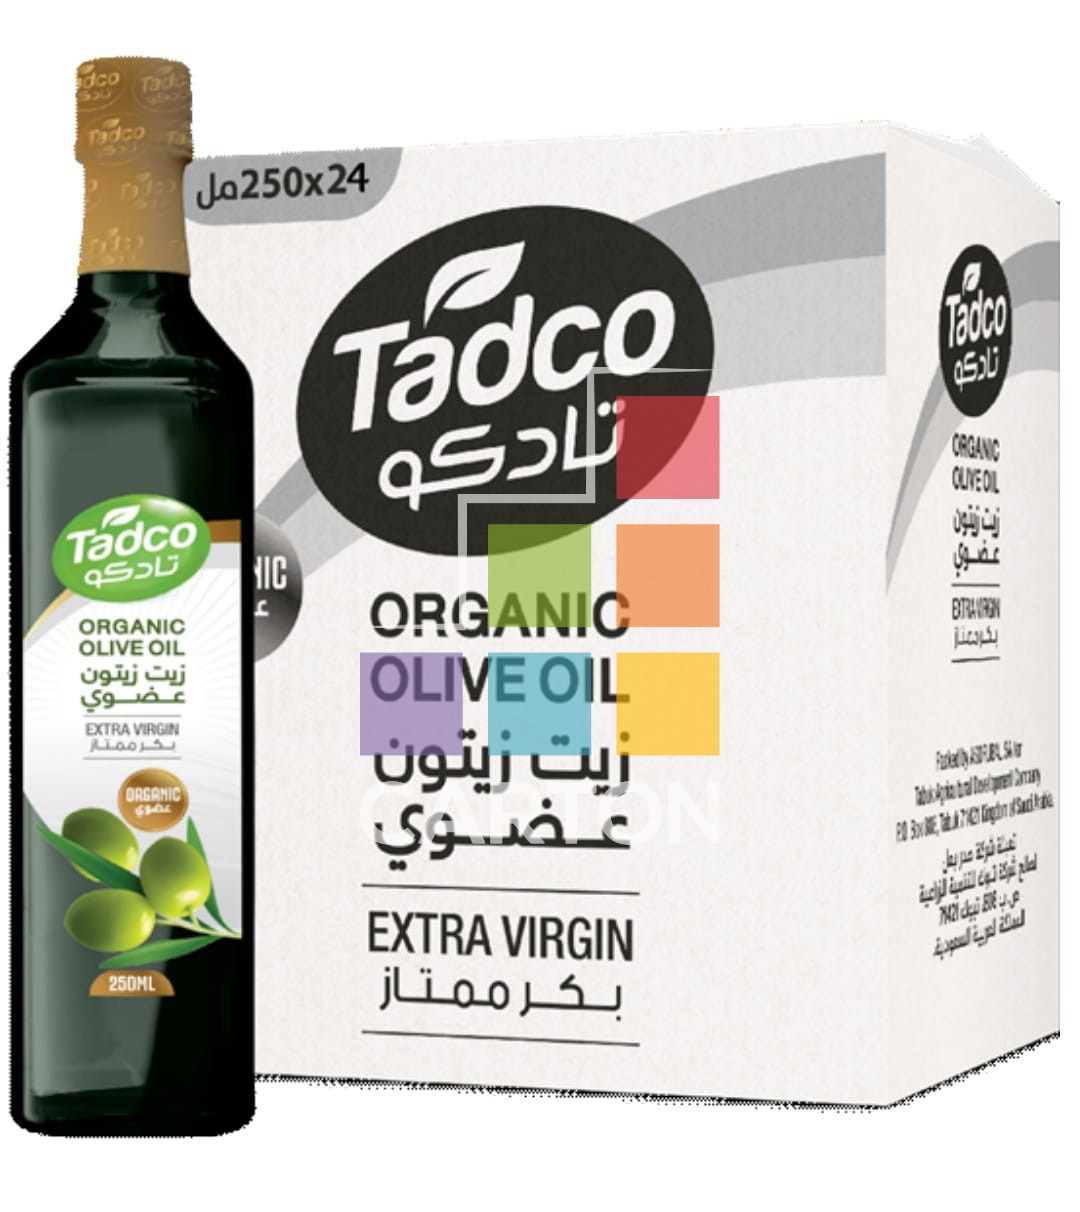 TADCO ORGANIC EXTRA VIRGIN OLIVE OIL 3*250ML